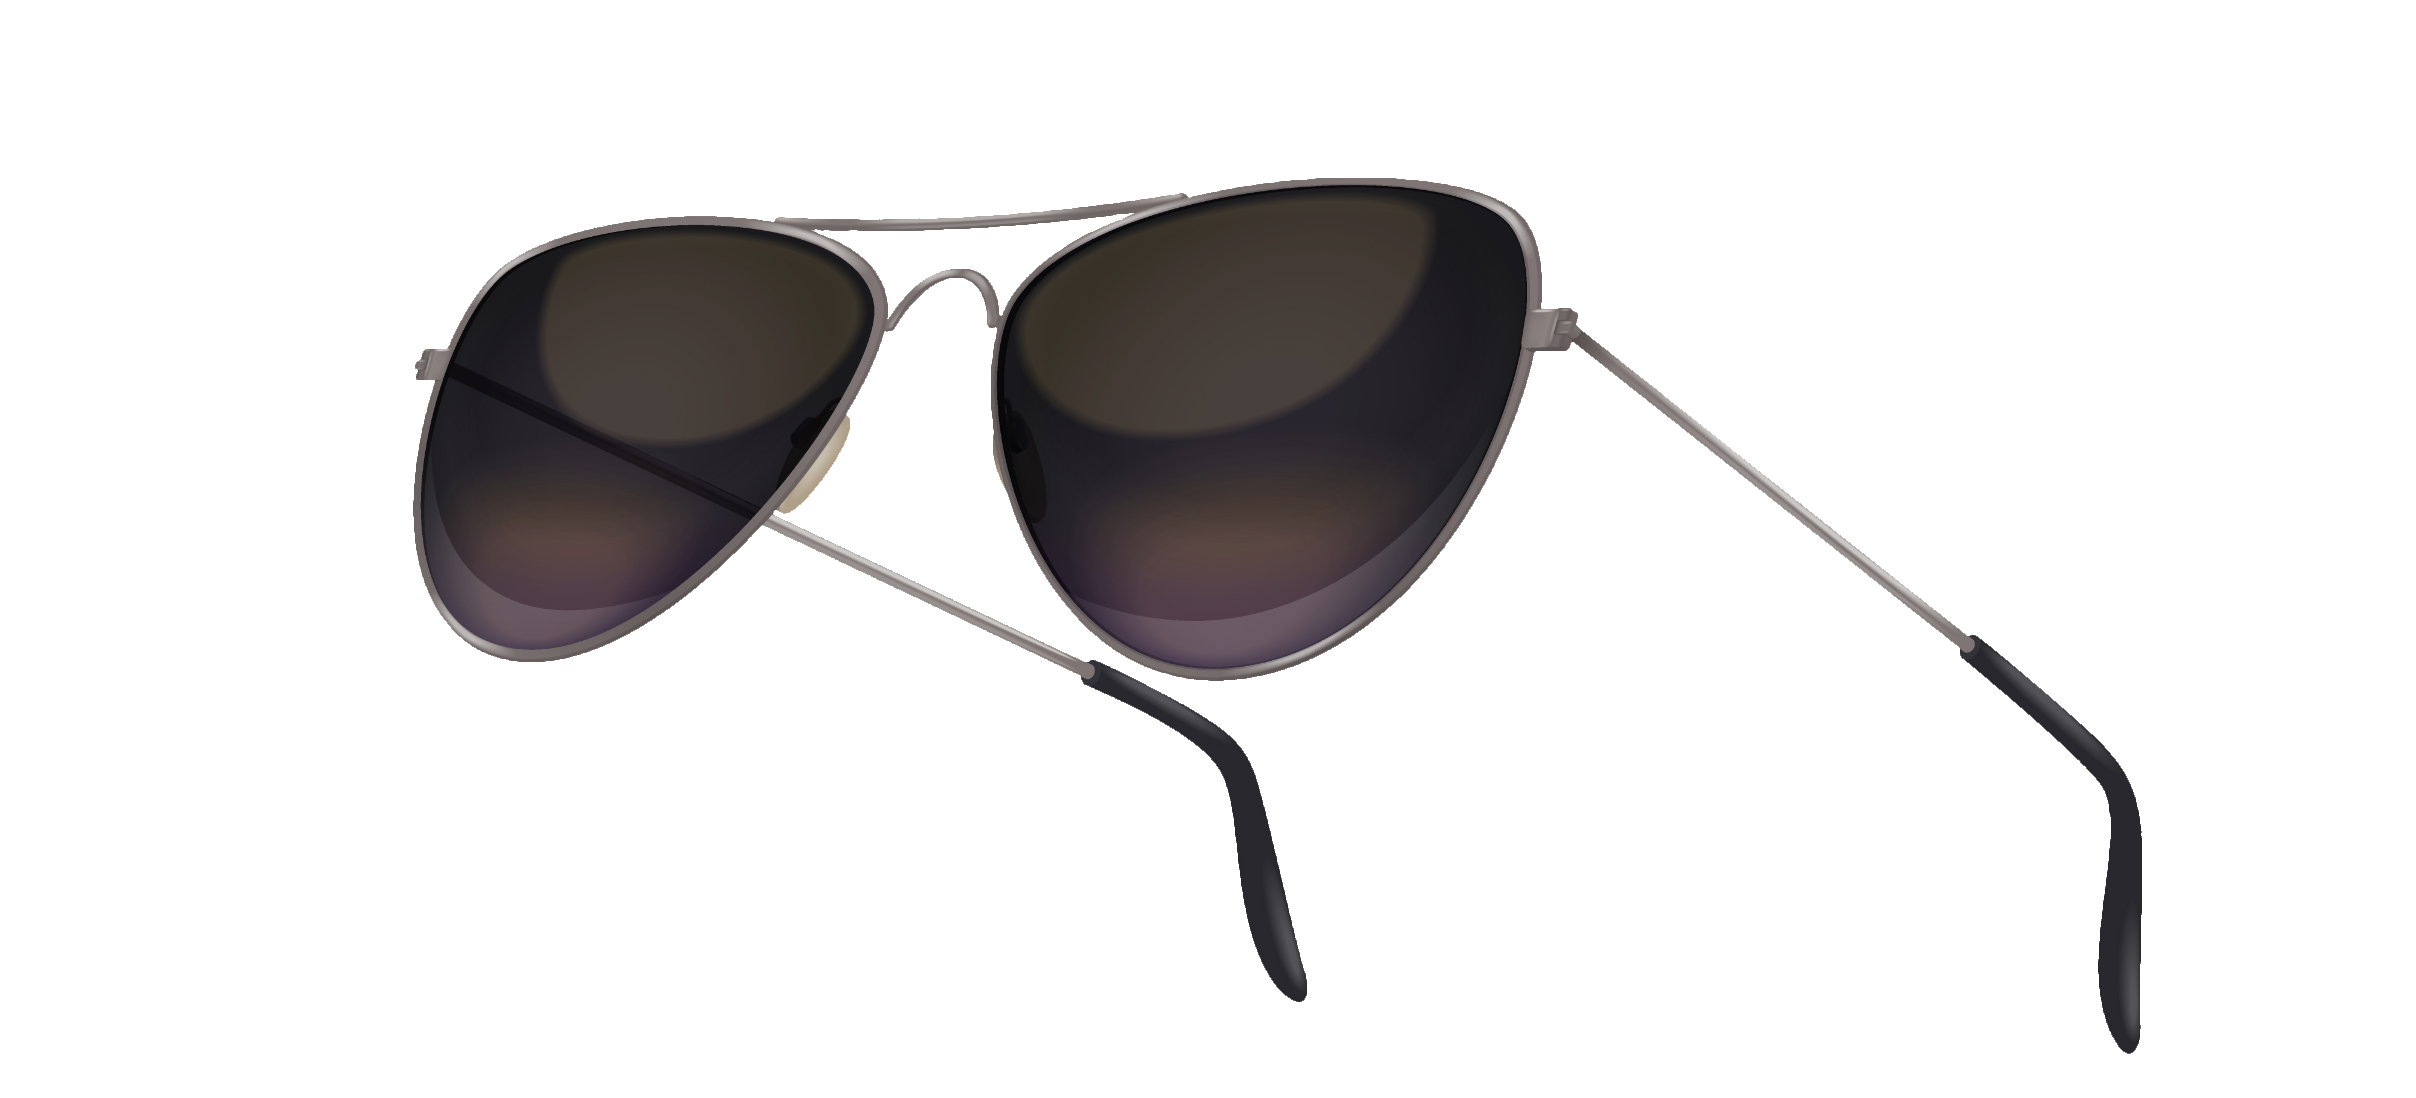 sunglasses-43